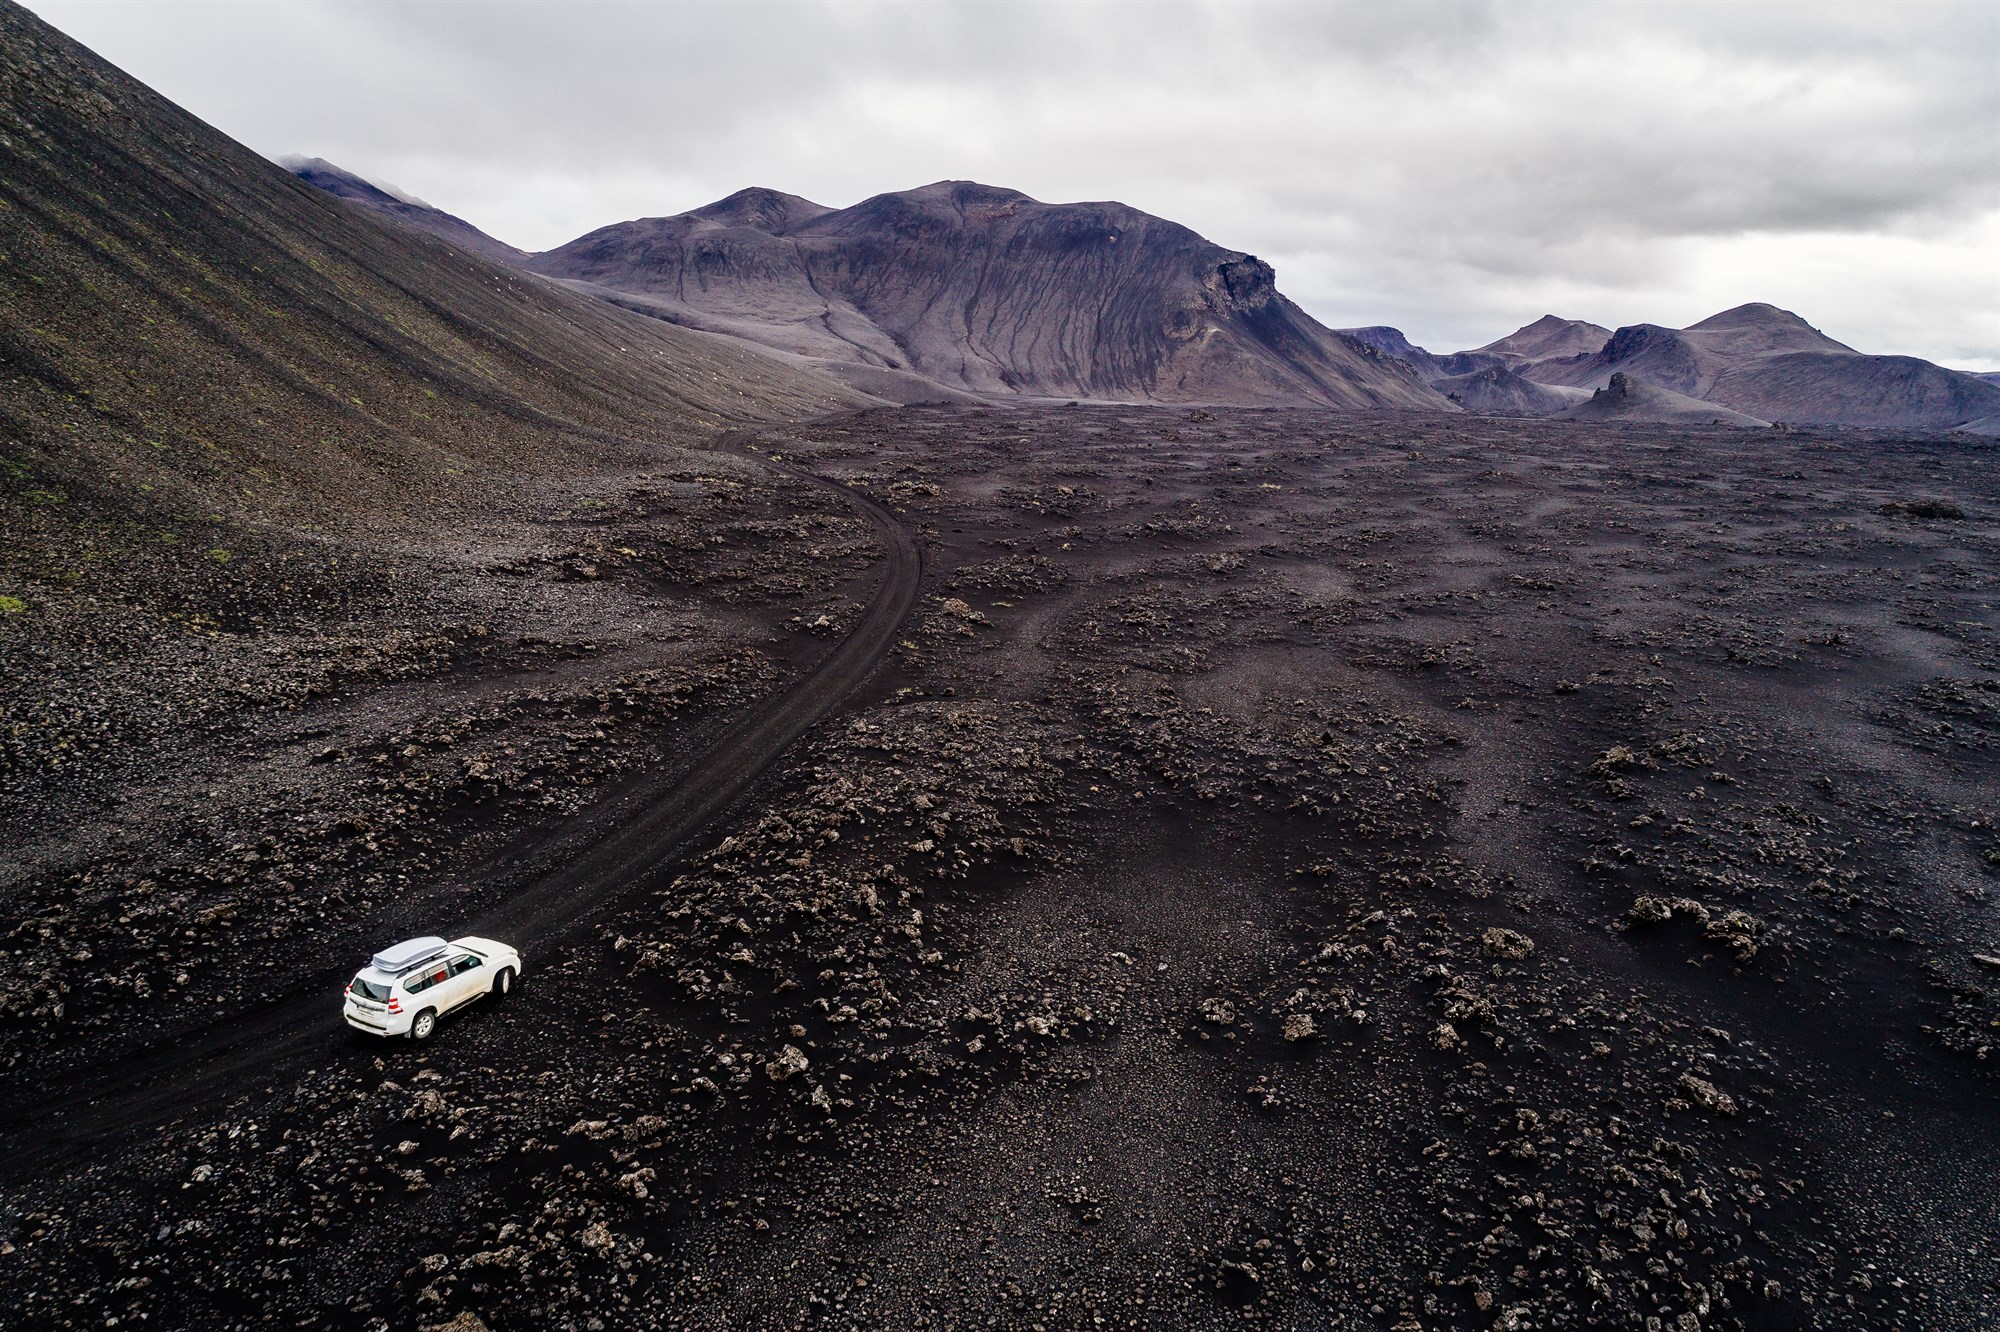 White SUV on Icelandic dirt road near mountain summit